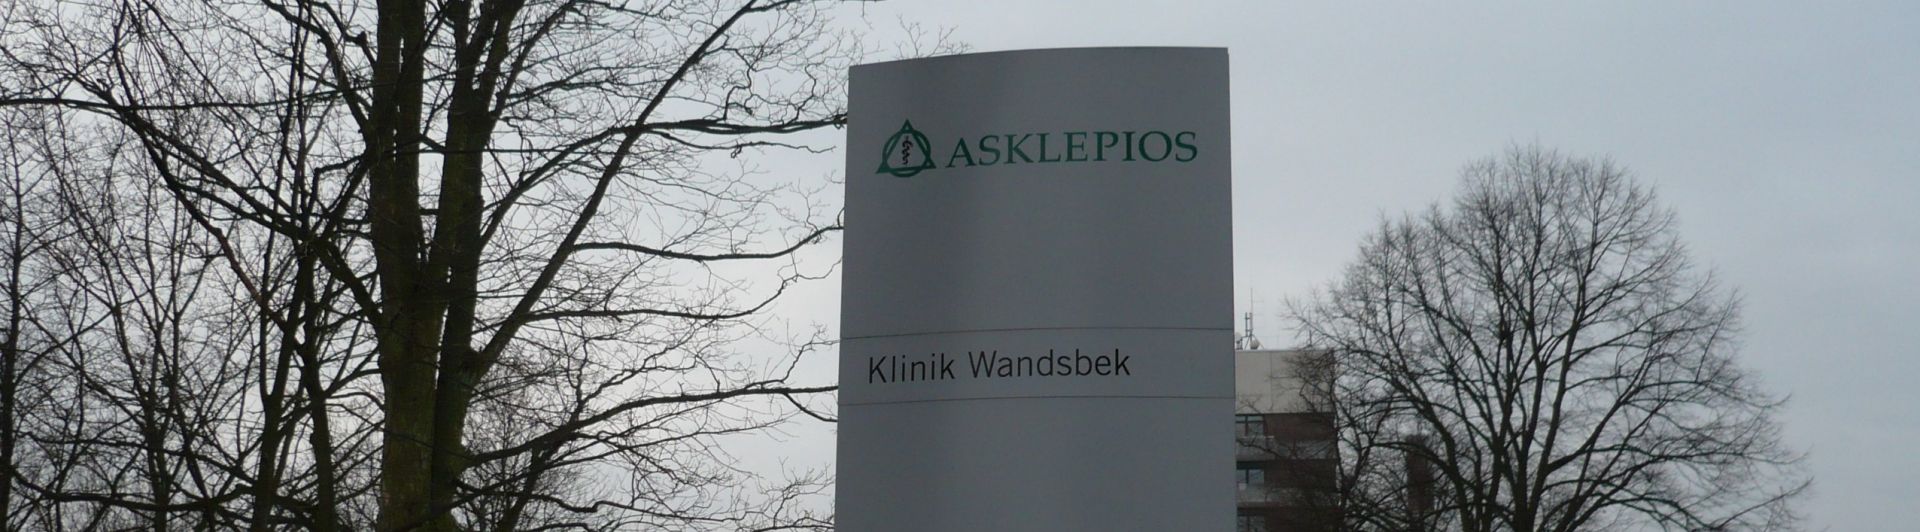 Asklepios Klinik Wandsbek Hamburg